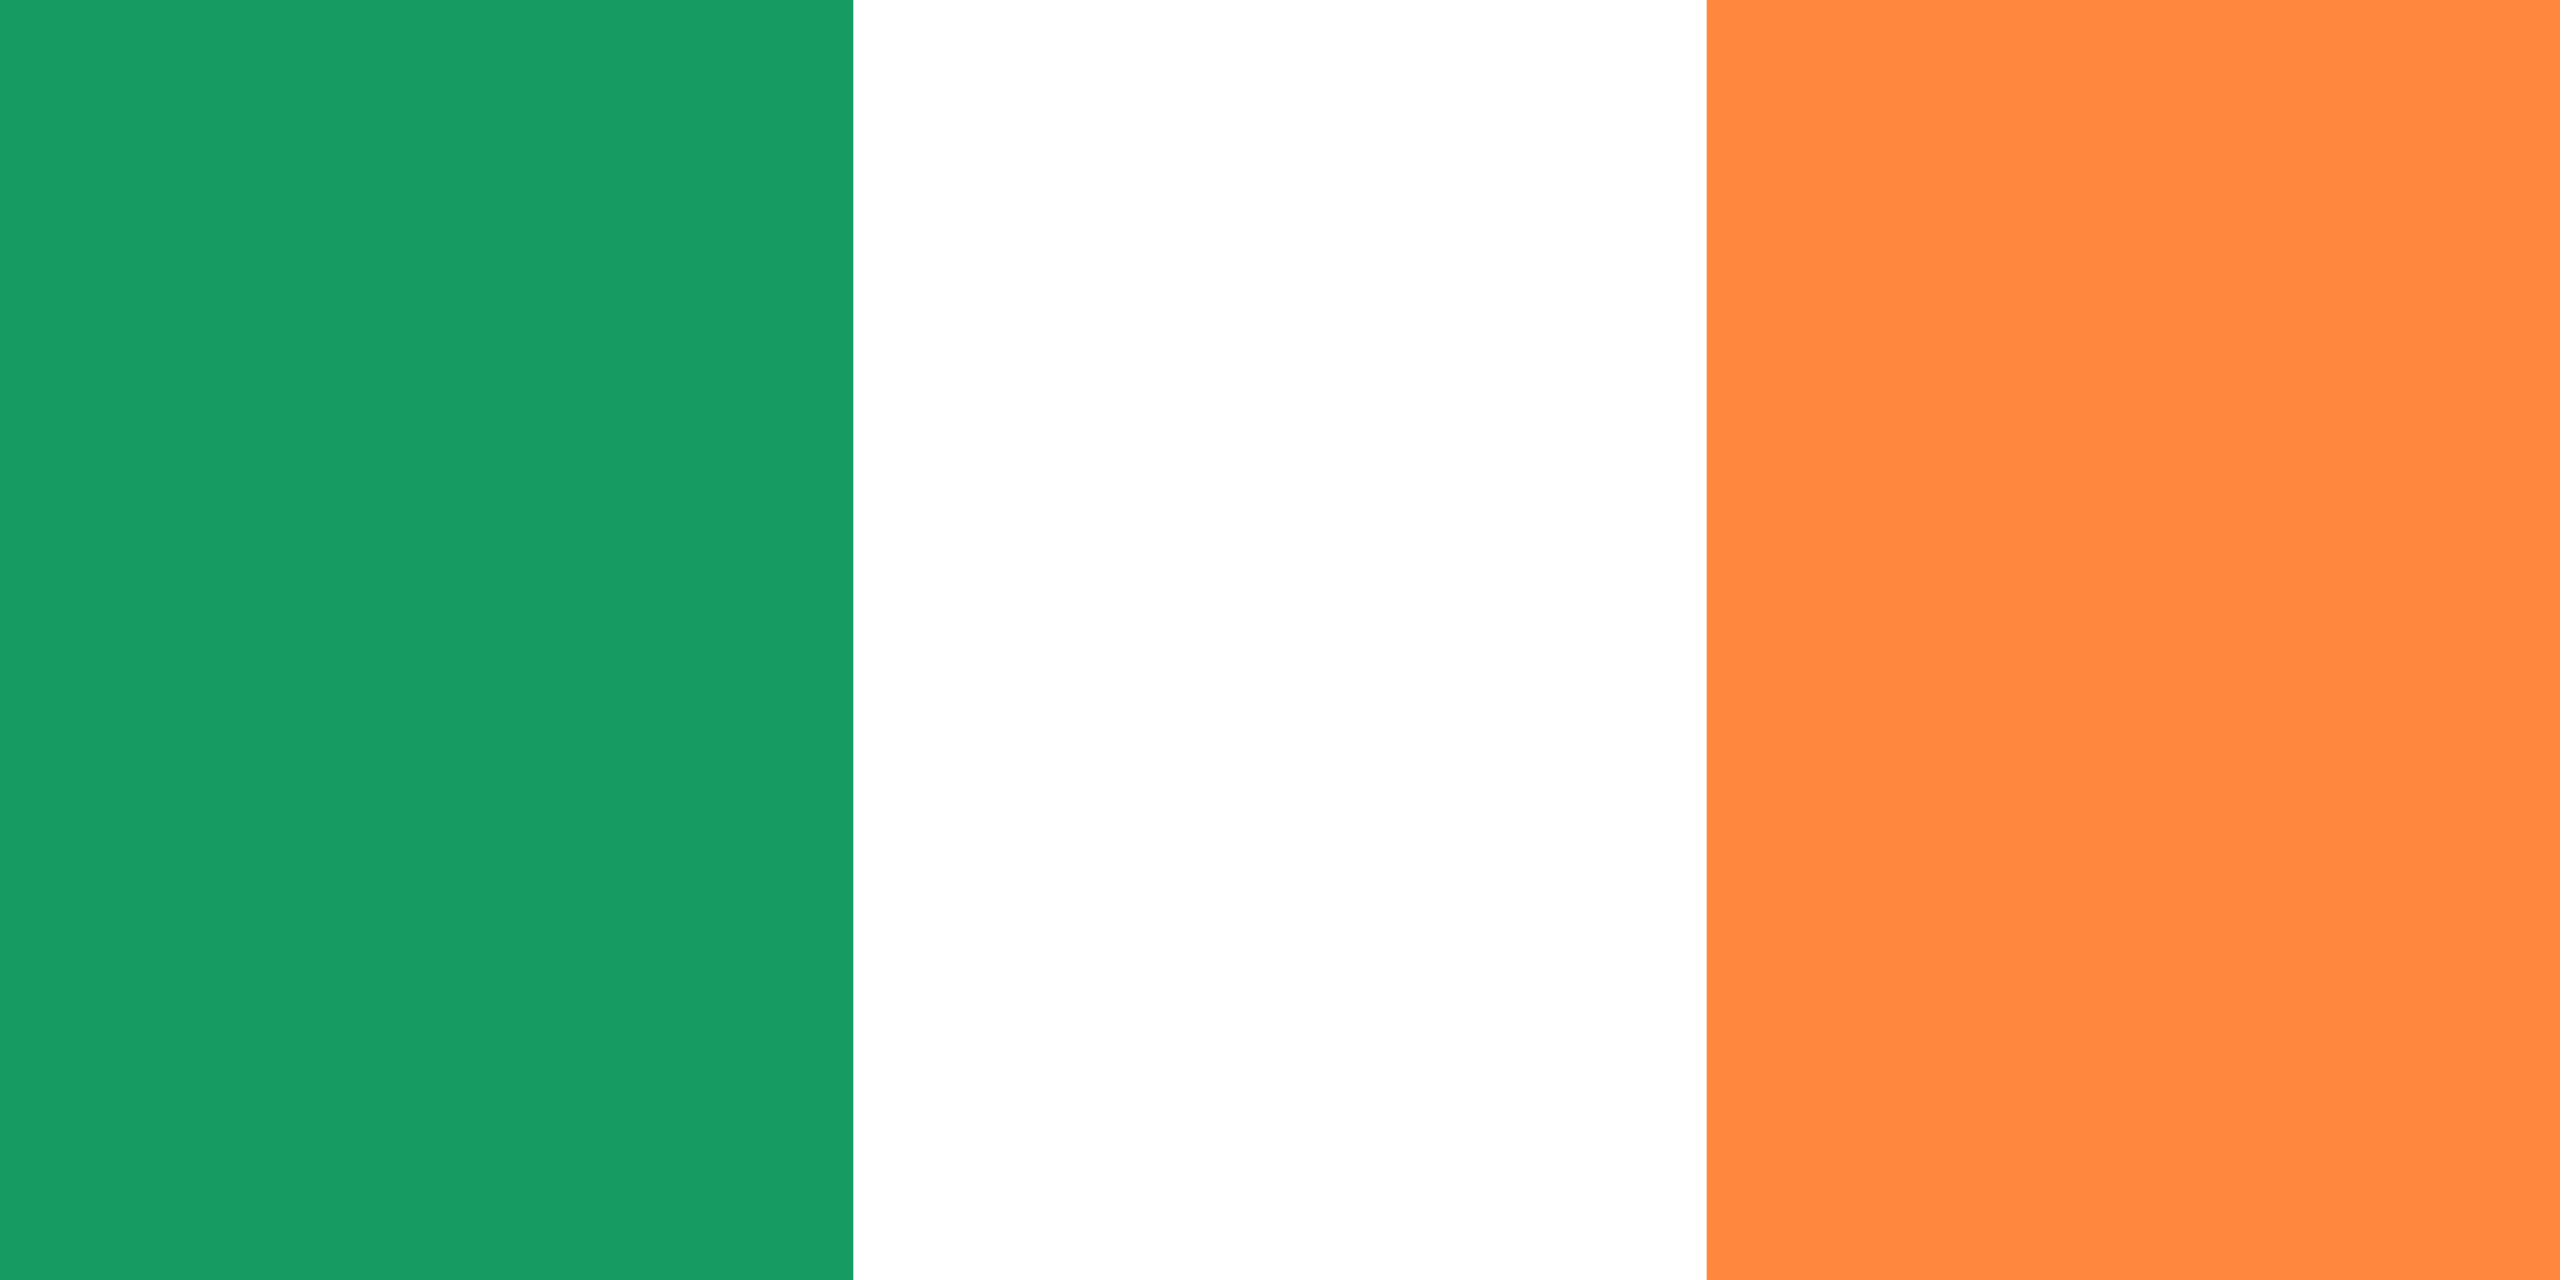 File:Irish flag.png.png